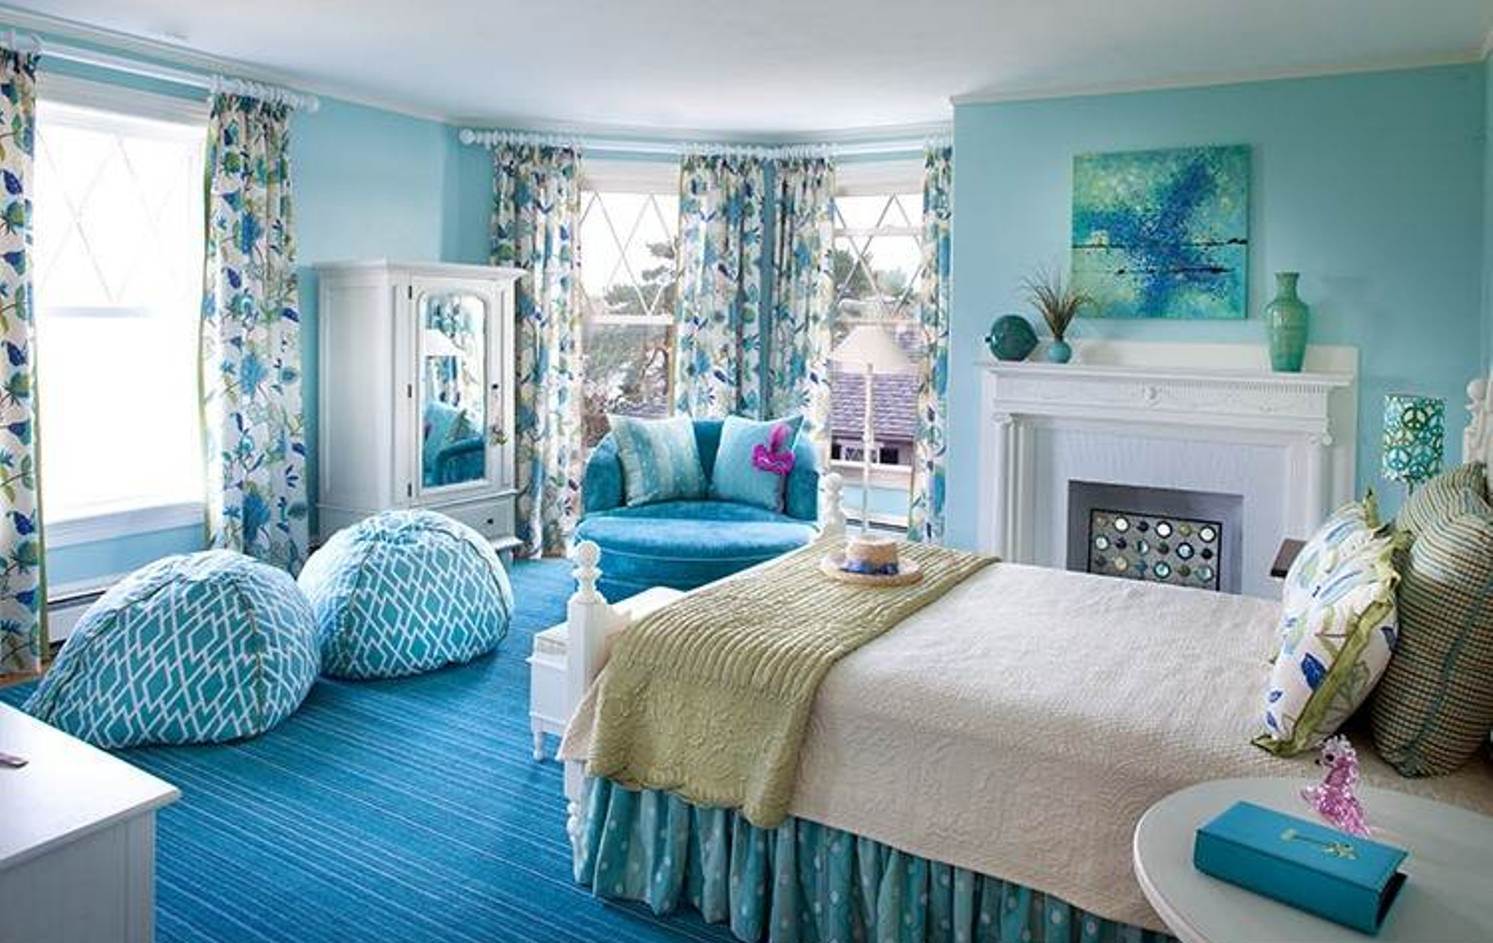 Blue Bedroom Ideas